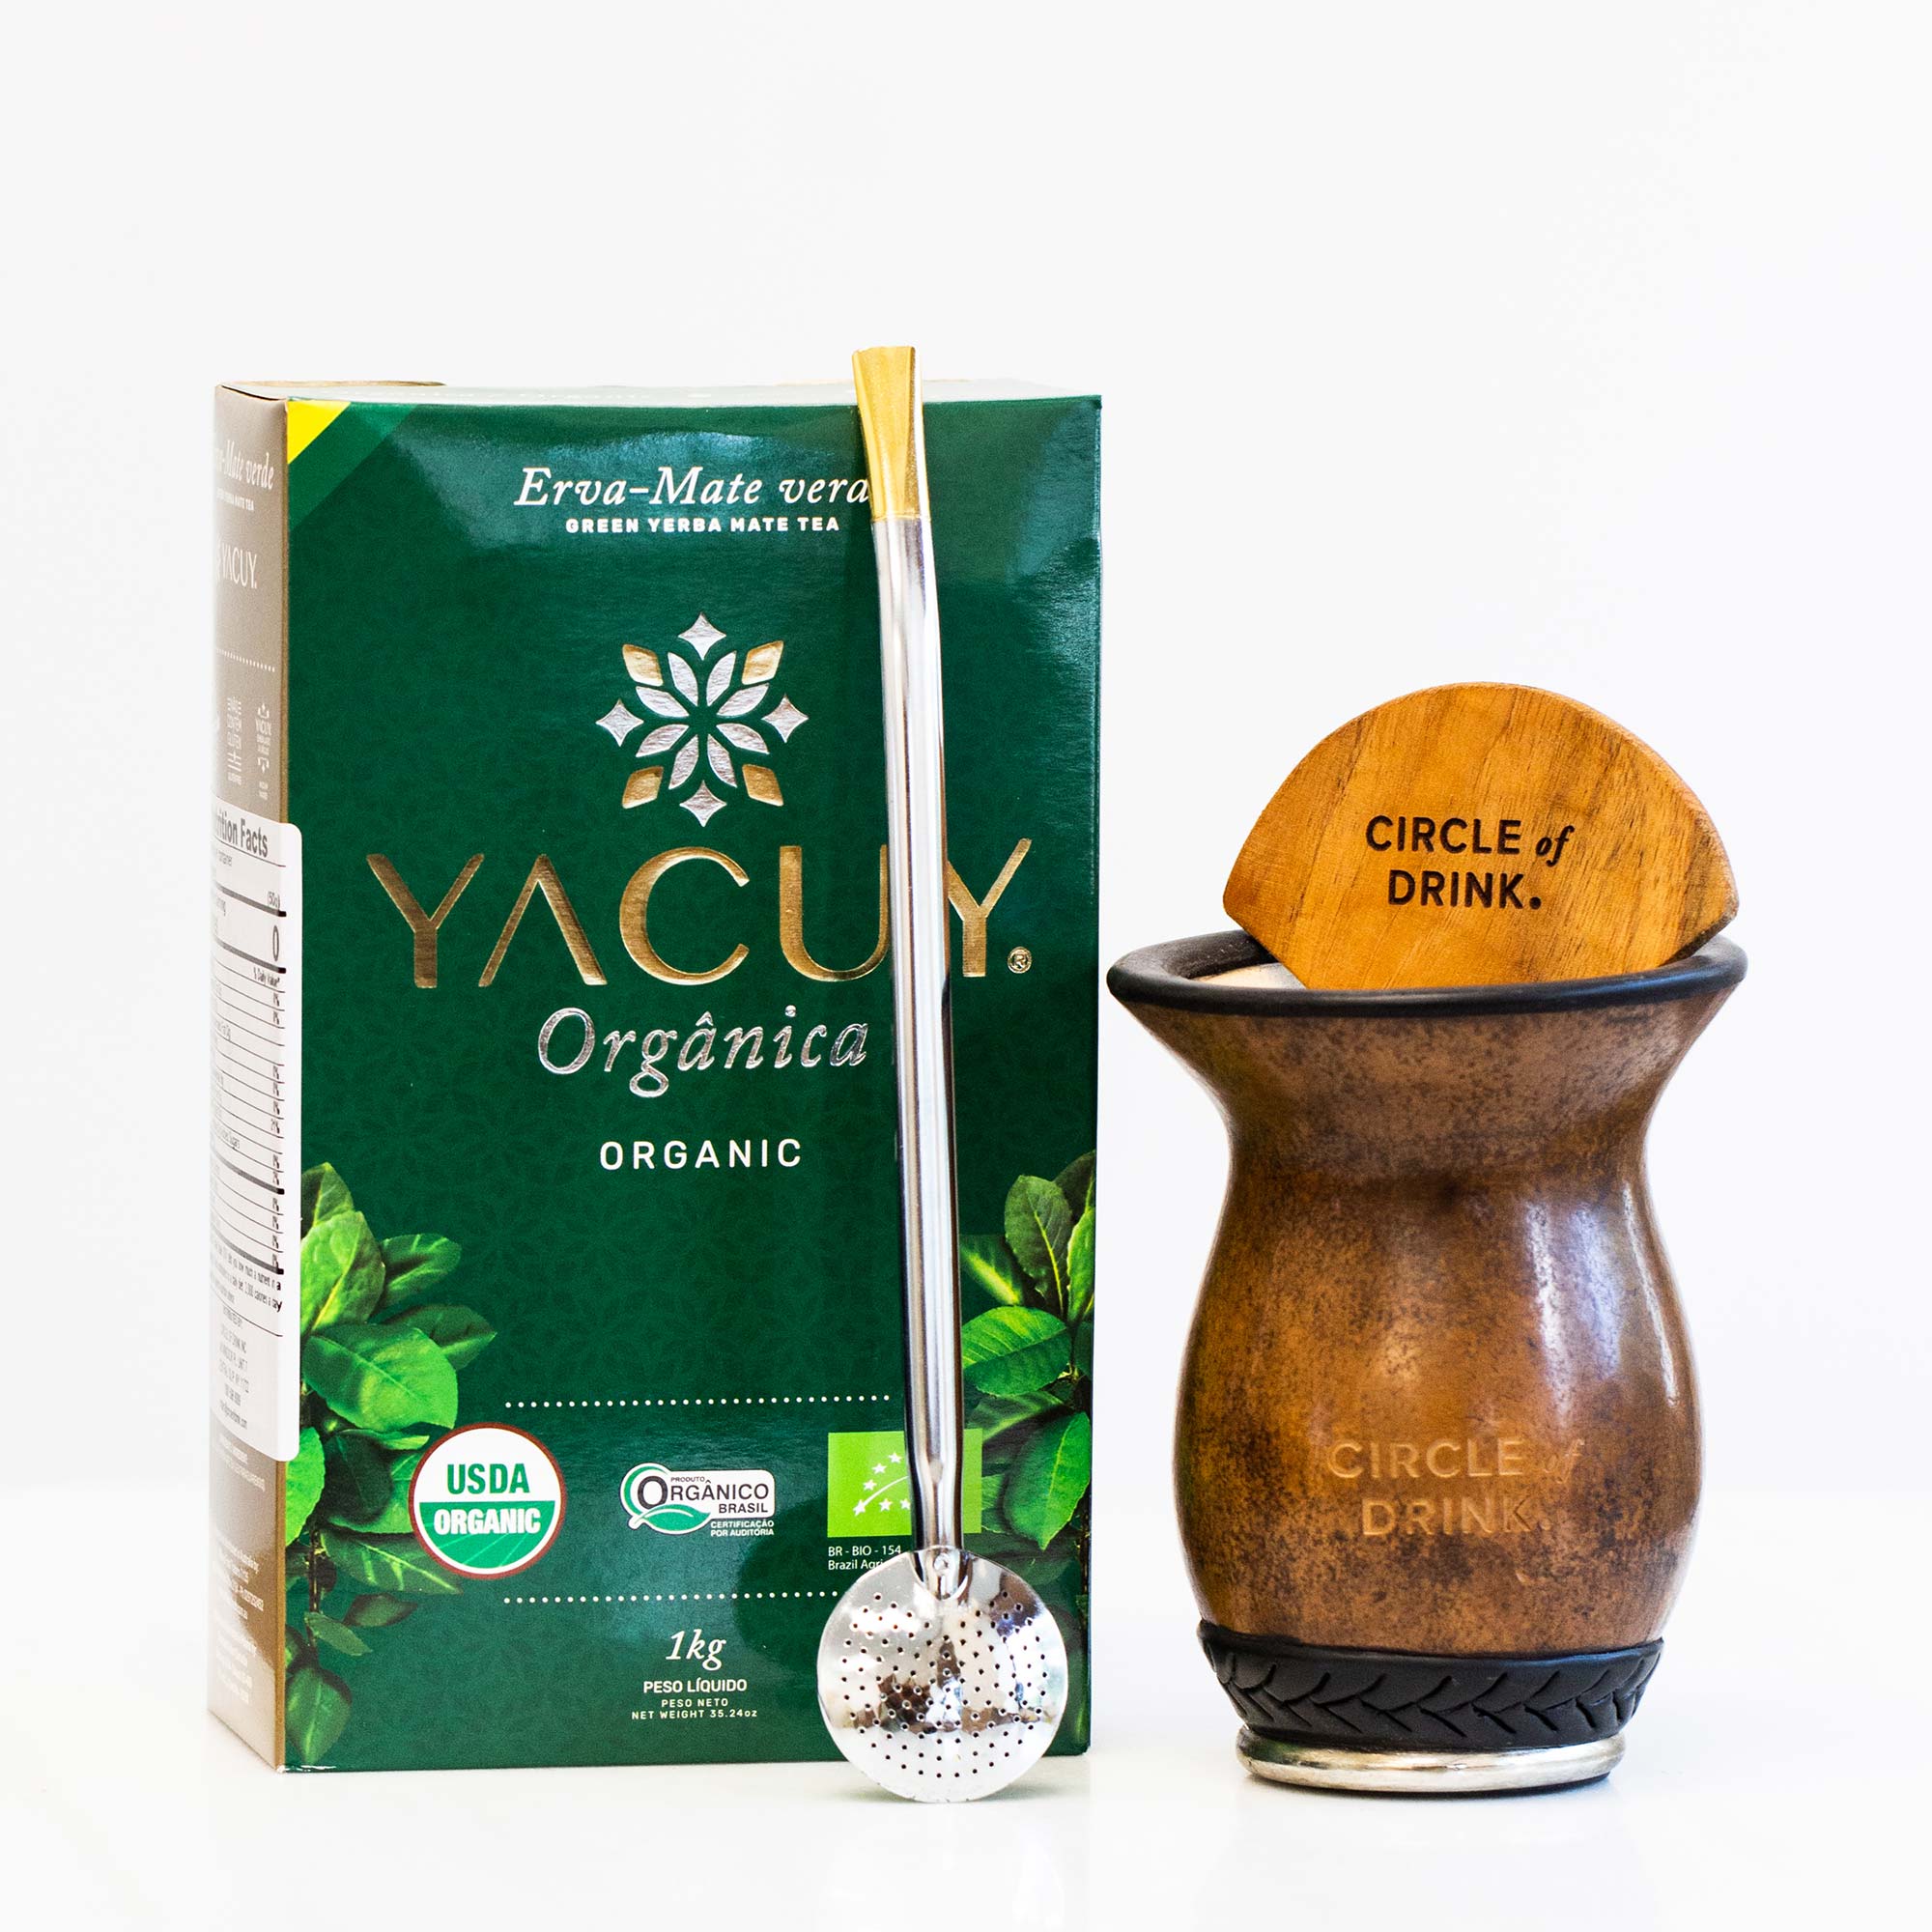 Sabado Chalice x Yacuy Organic Mate Kit - Circle of Drink